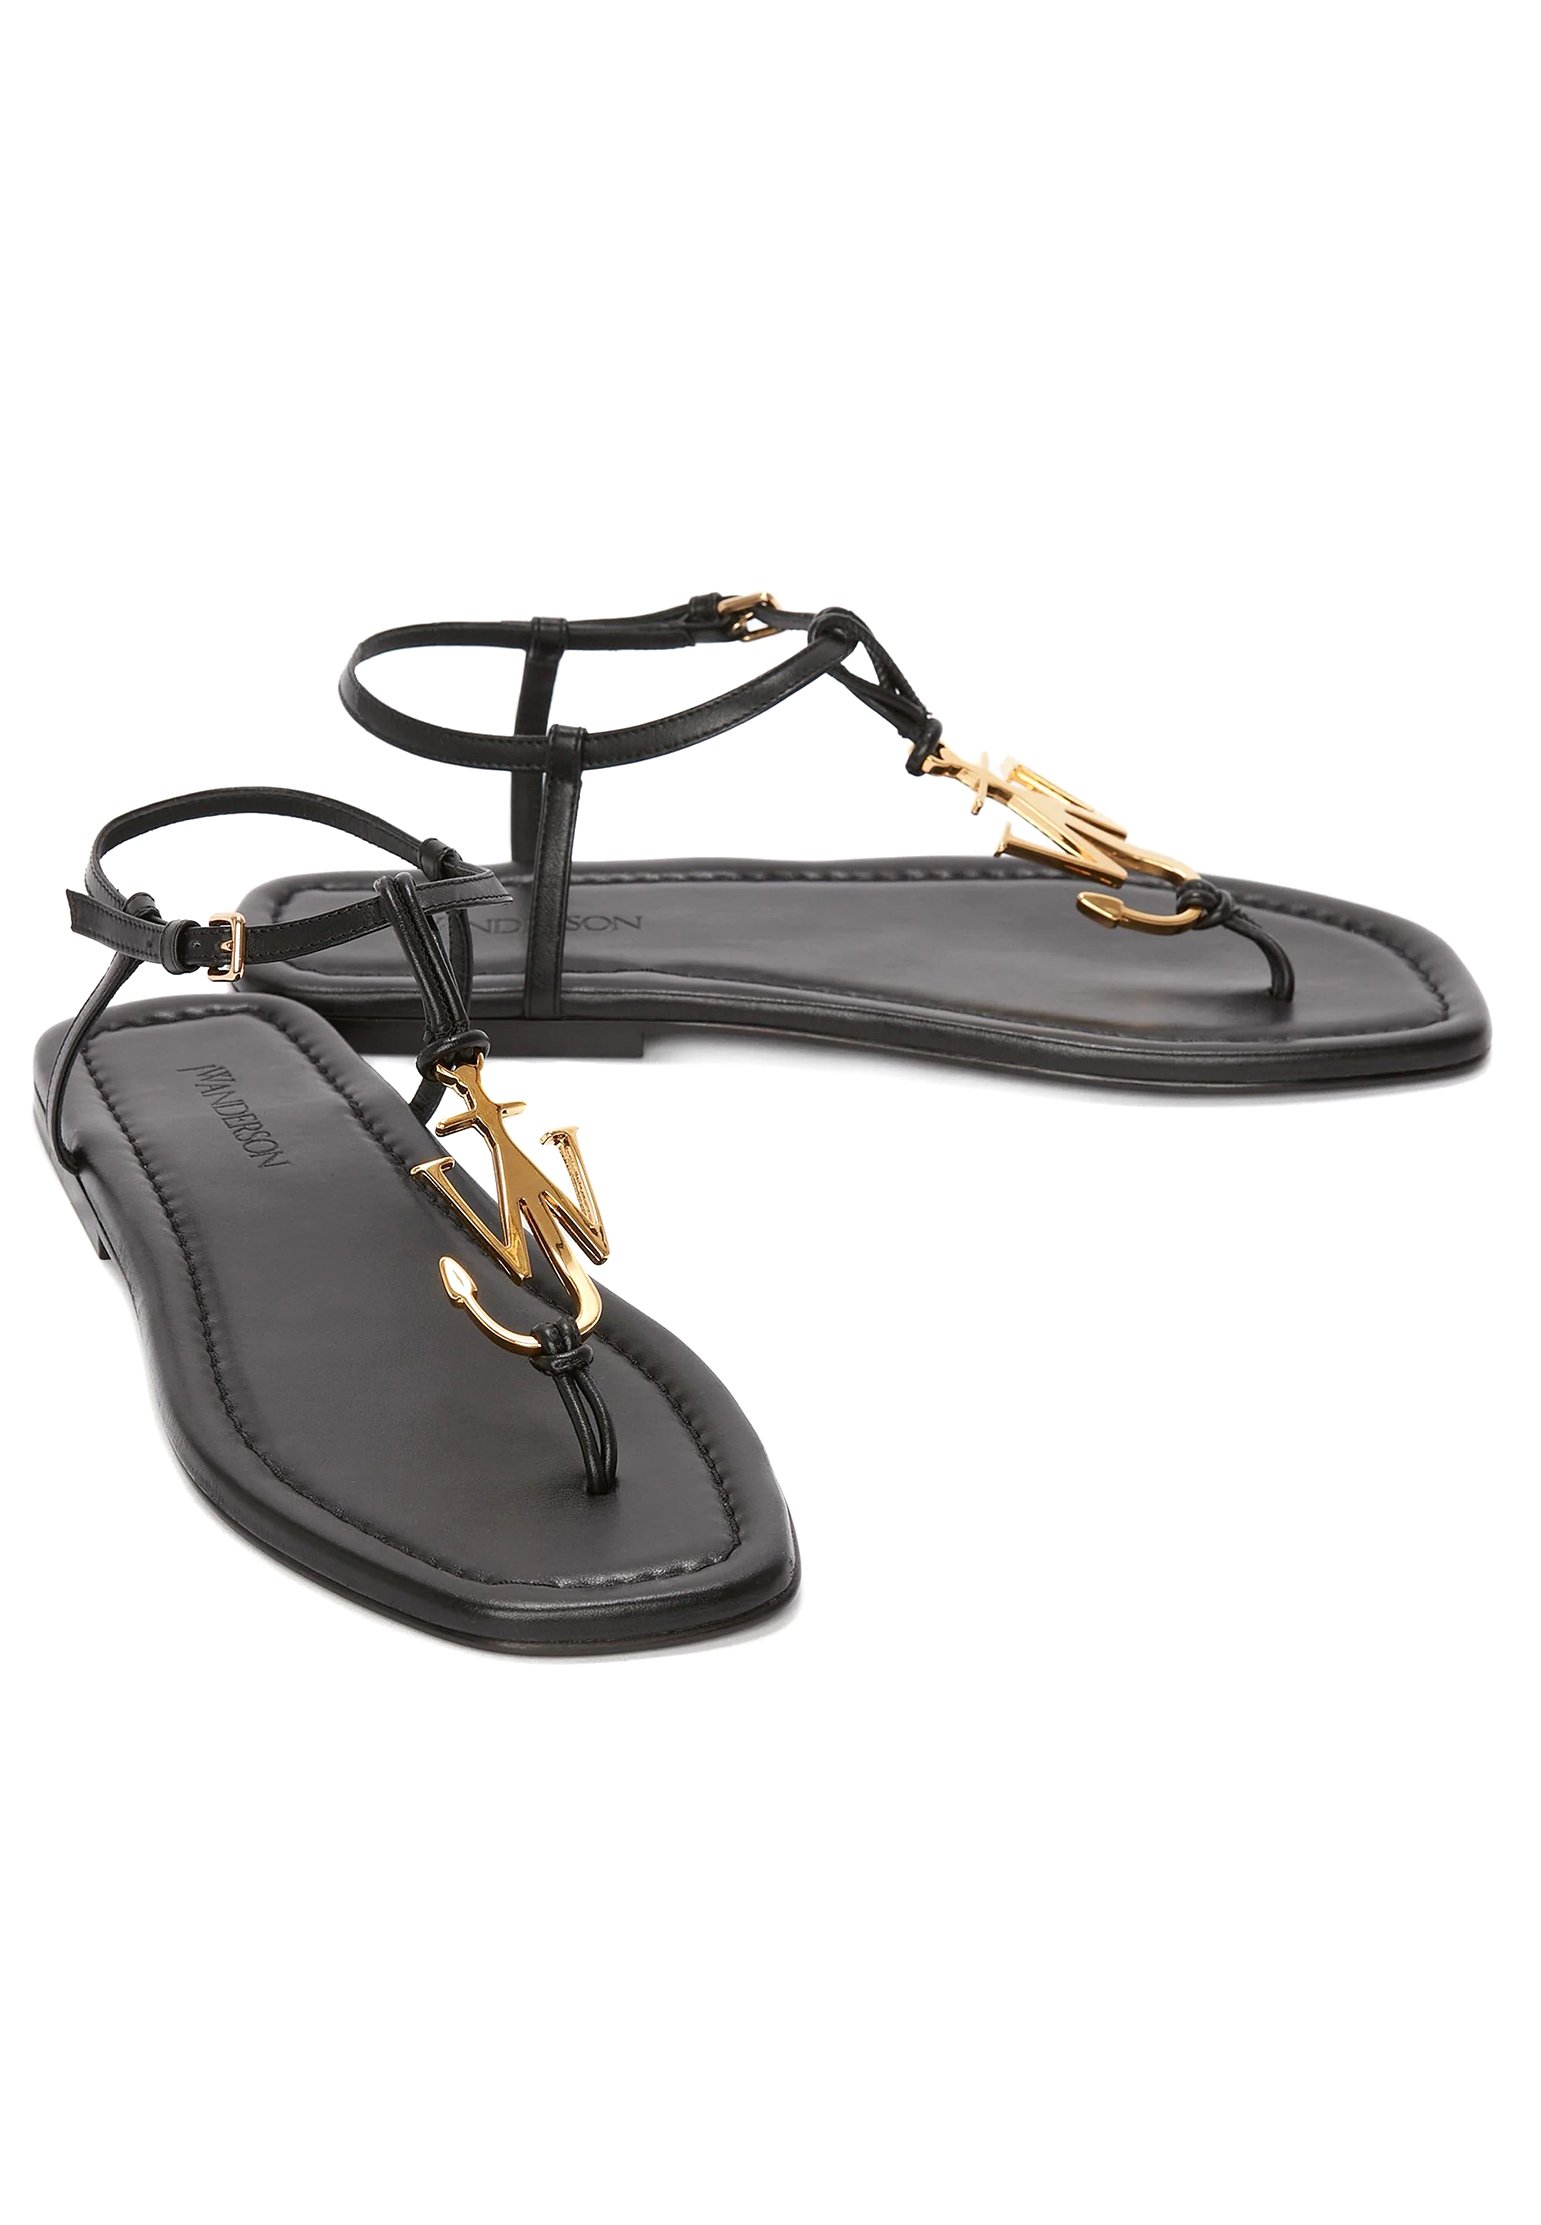 Sandals J.W. ANDERSON Color: black (Code: 735) in online store Allure